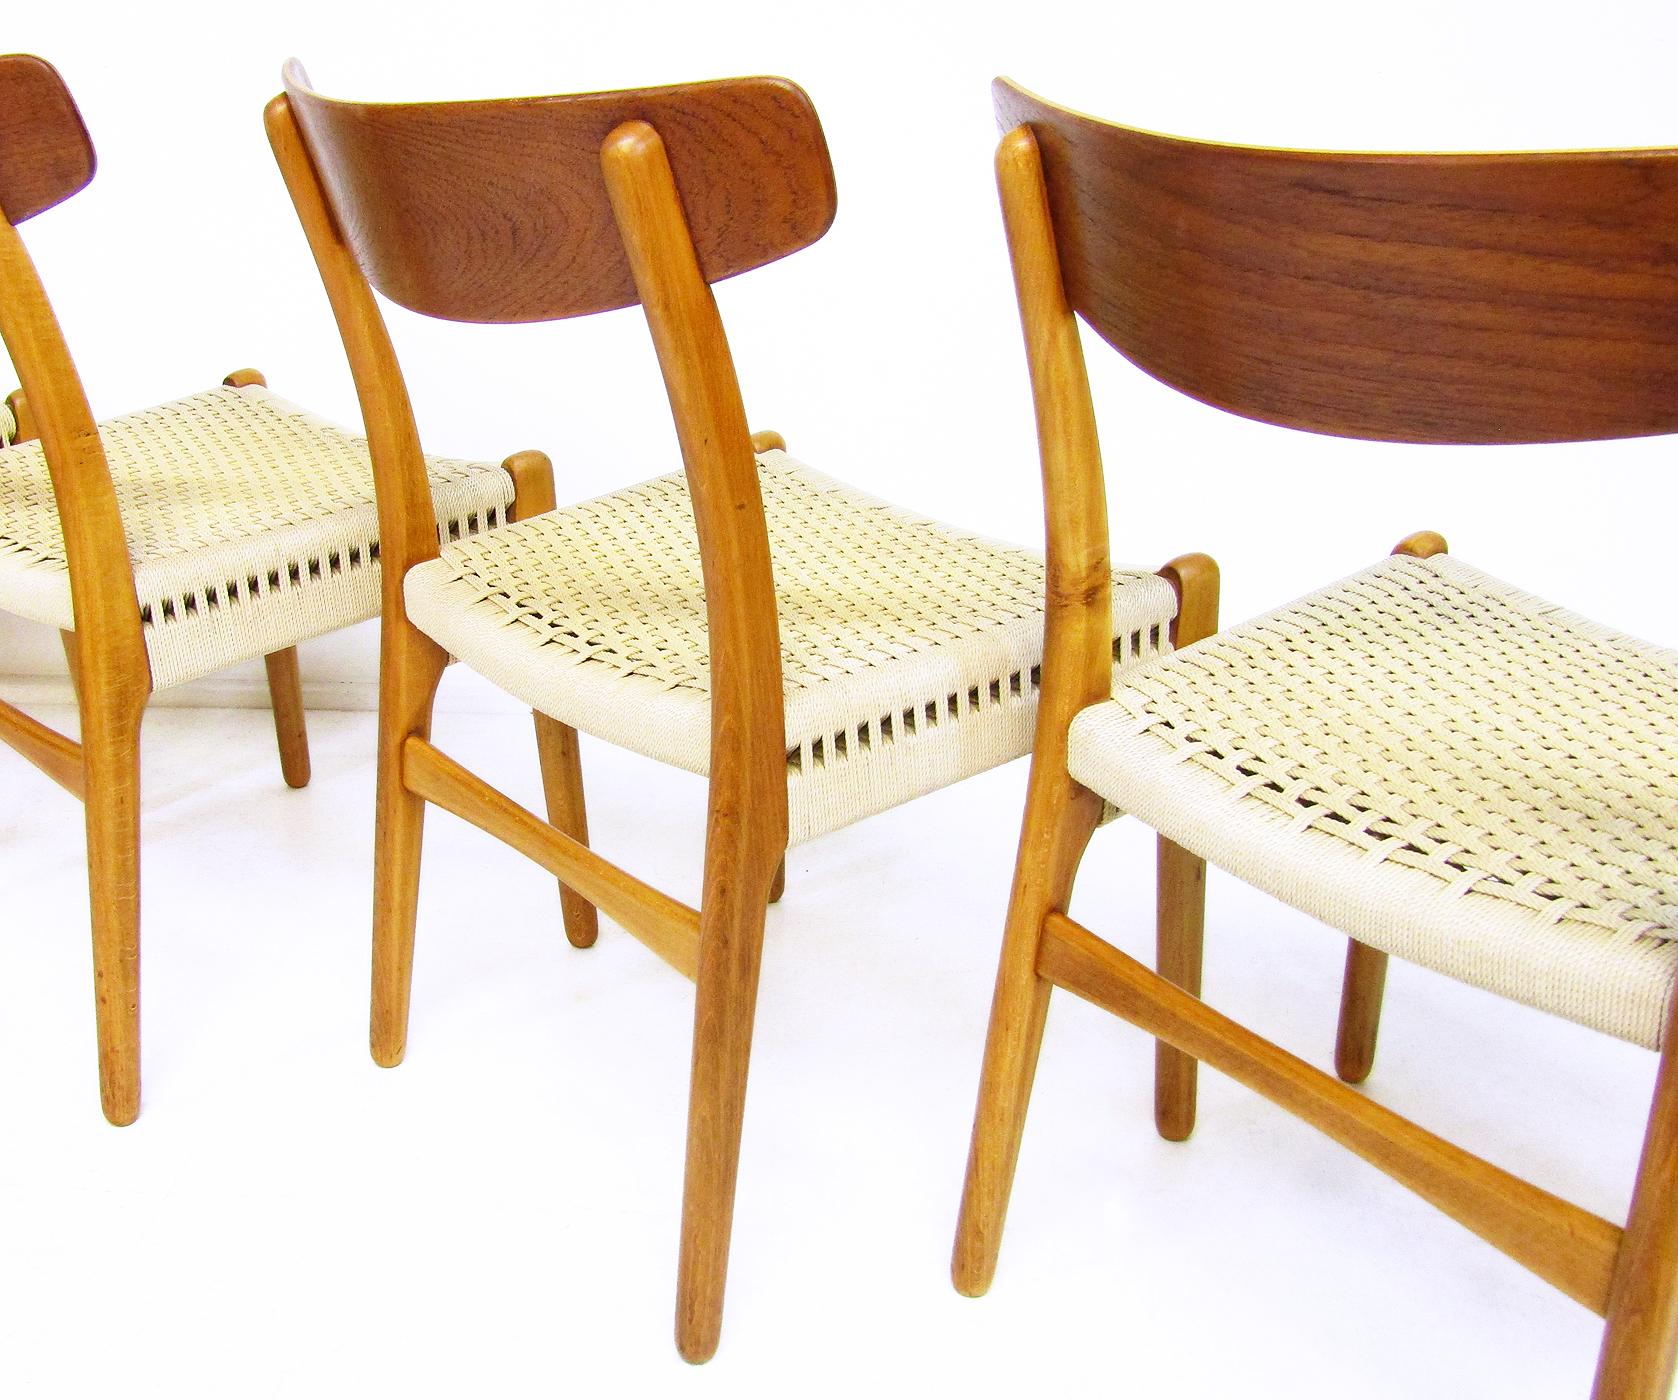 Four Vintage 1950s CH-23 Chairs by Hans Wegner for Carl Hansen in Teak & Oak For Sale 1